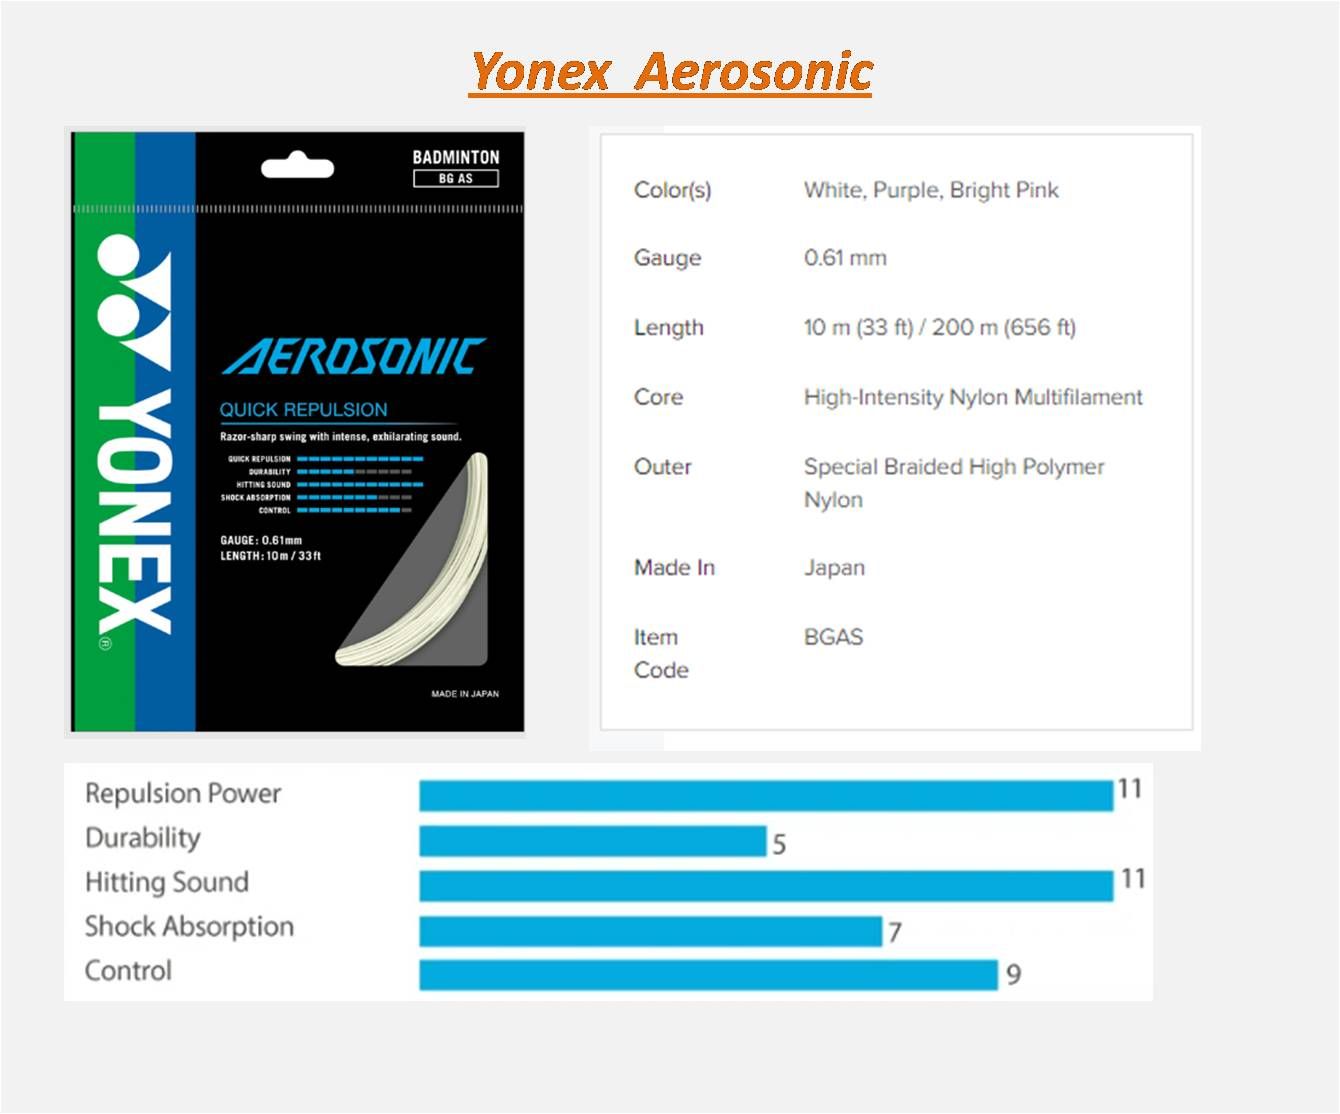 Yonex_aerosonic_Details_khelmart